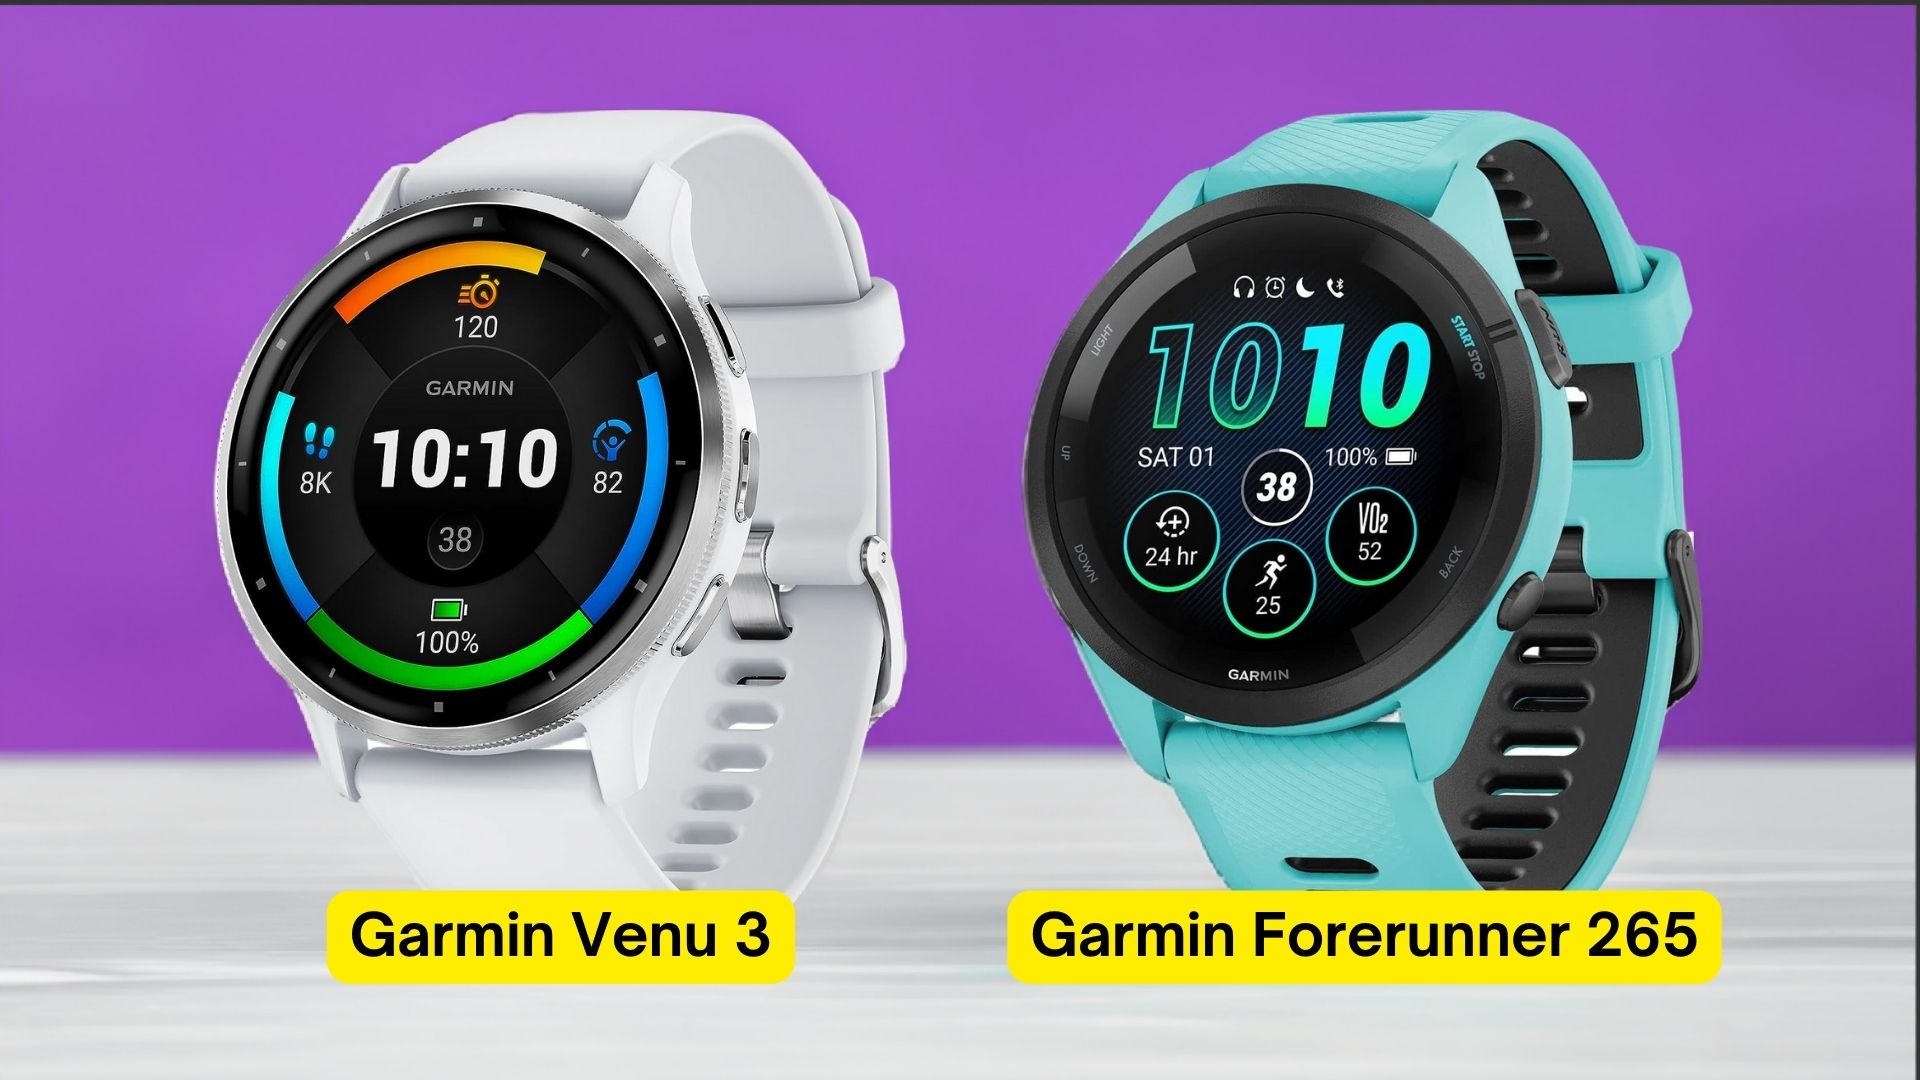 Garmin Venu 3 vs Forerunner 265: Which is Better?